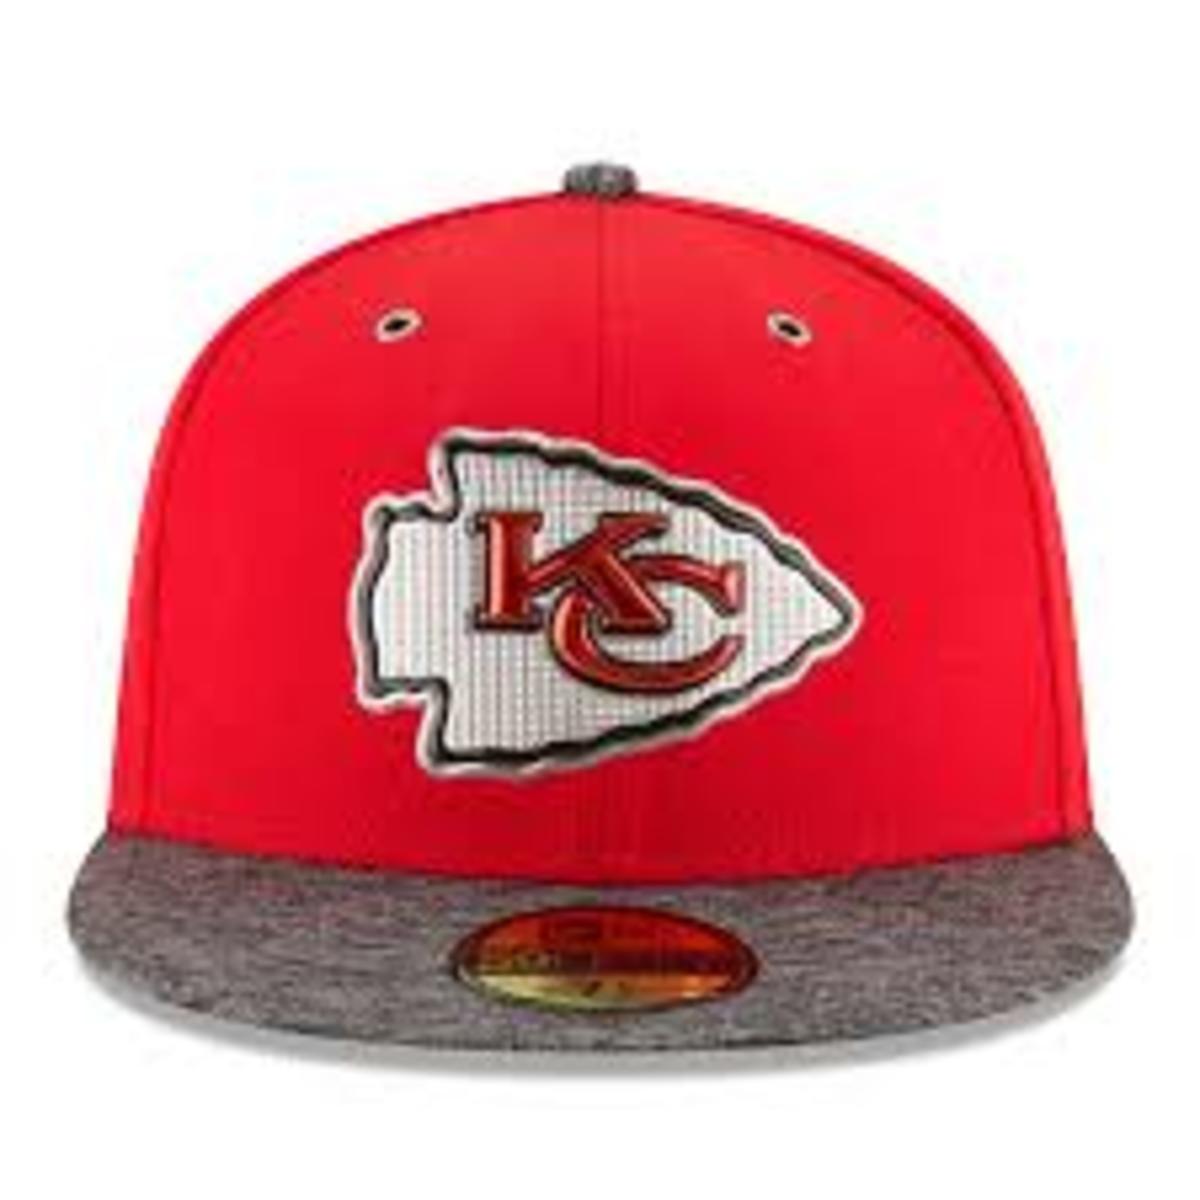 chiefs 2016 draft hat.jfif